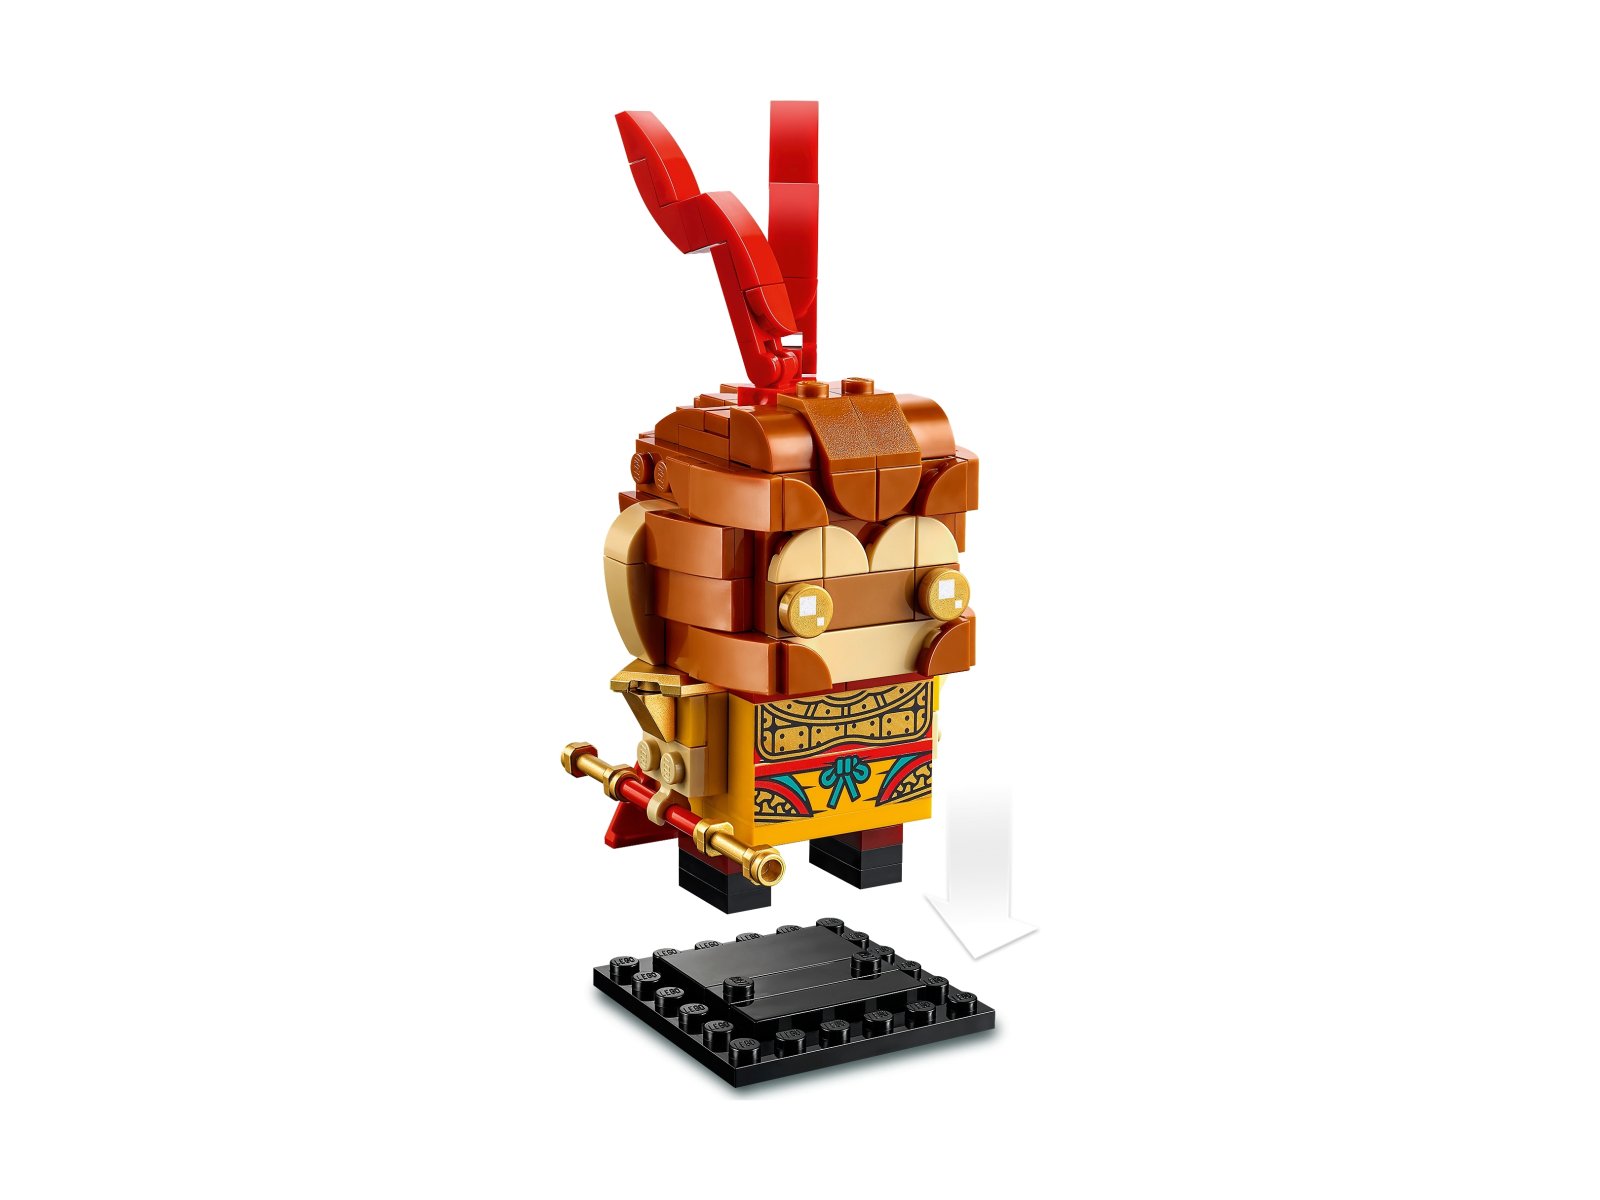 LEGO 40381 BrickHeadz Monkey King